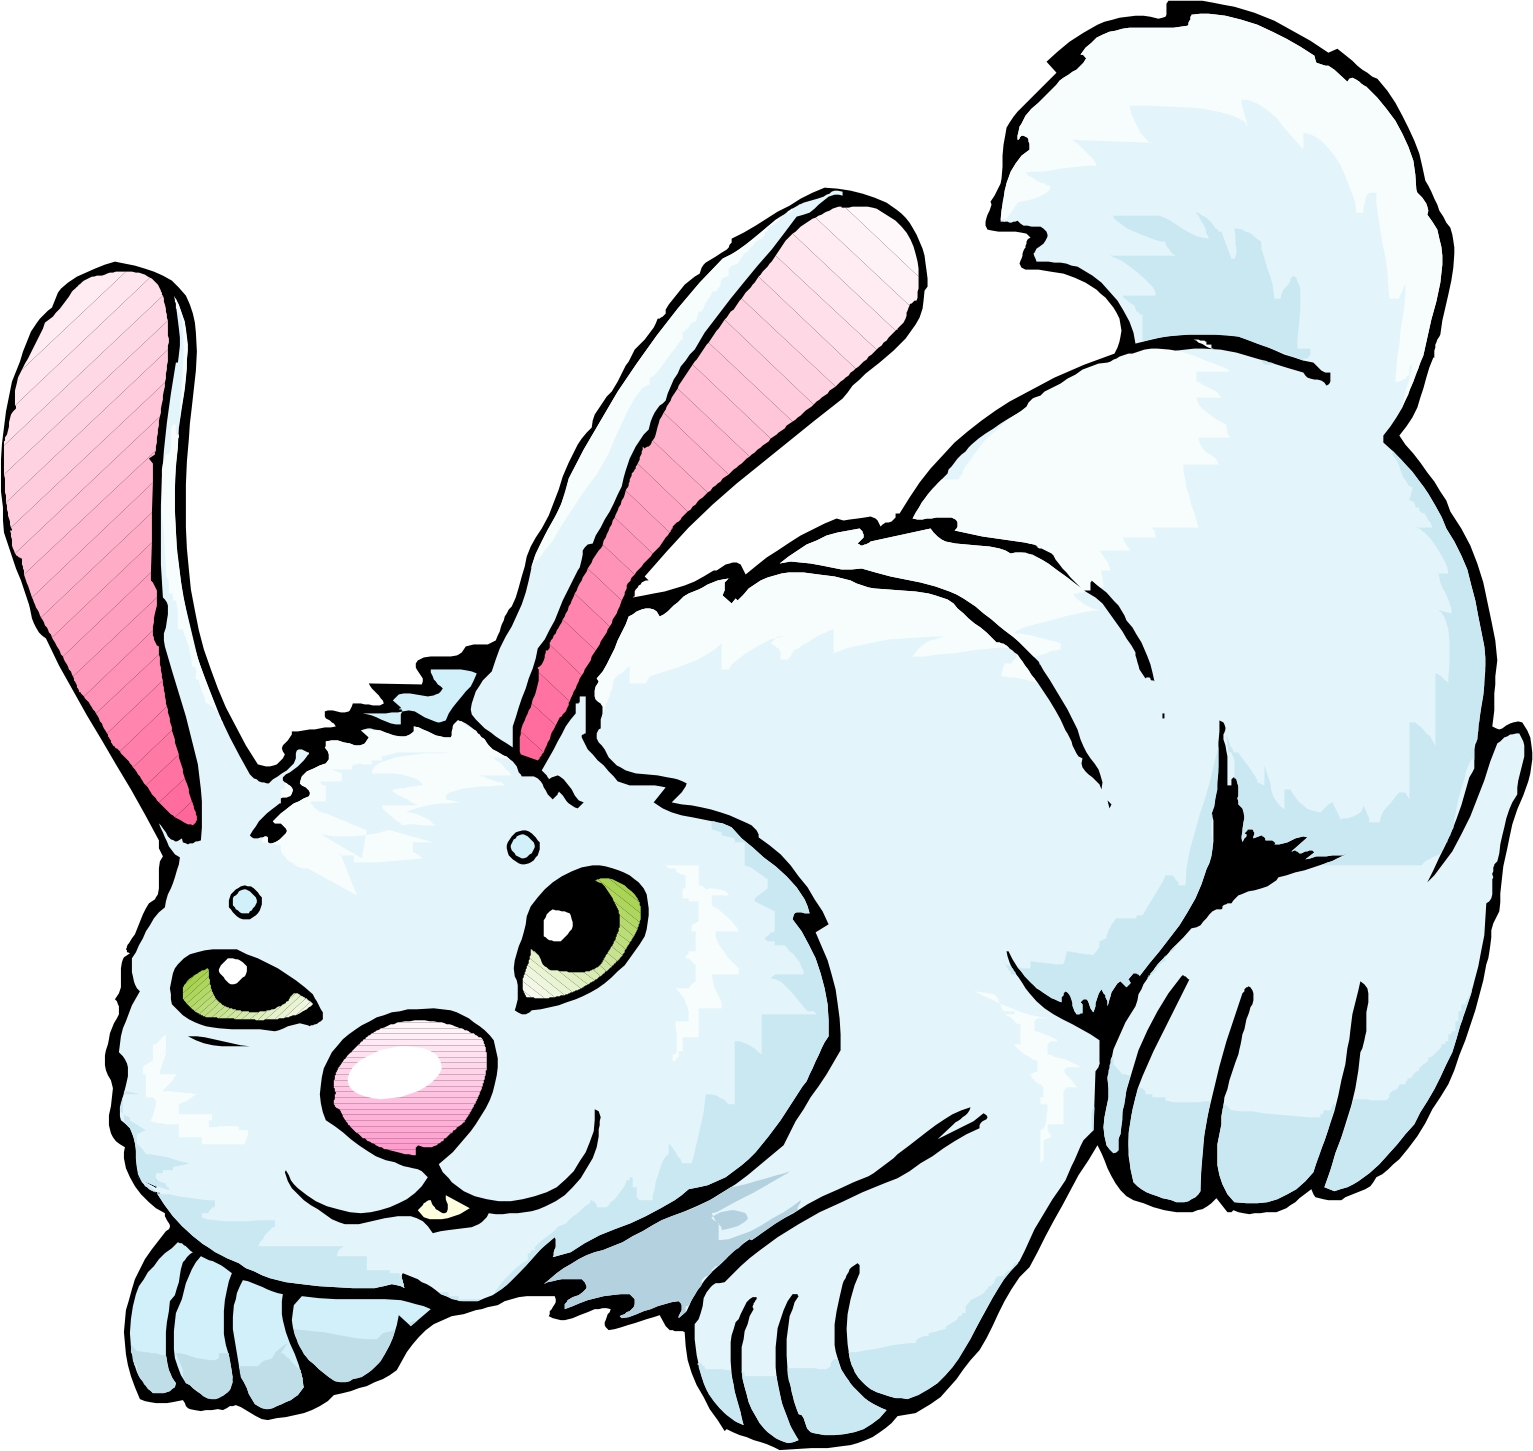 Free Cartoon Rabbit Images, Download Free Cartoon Rabbit Images png